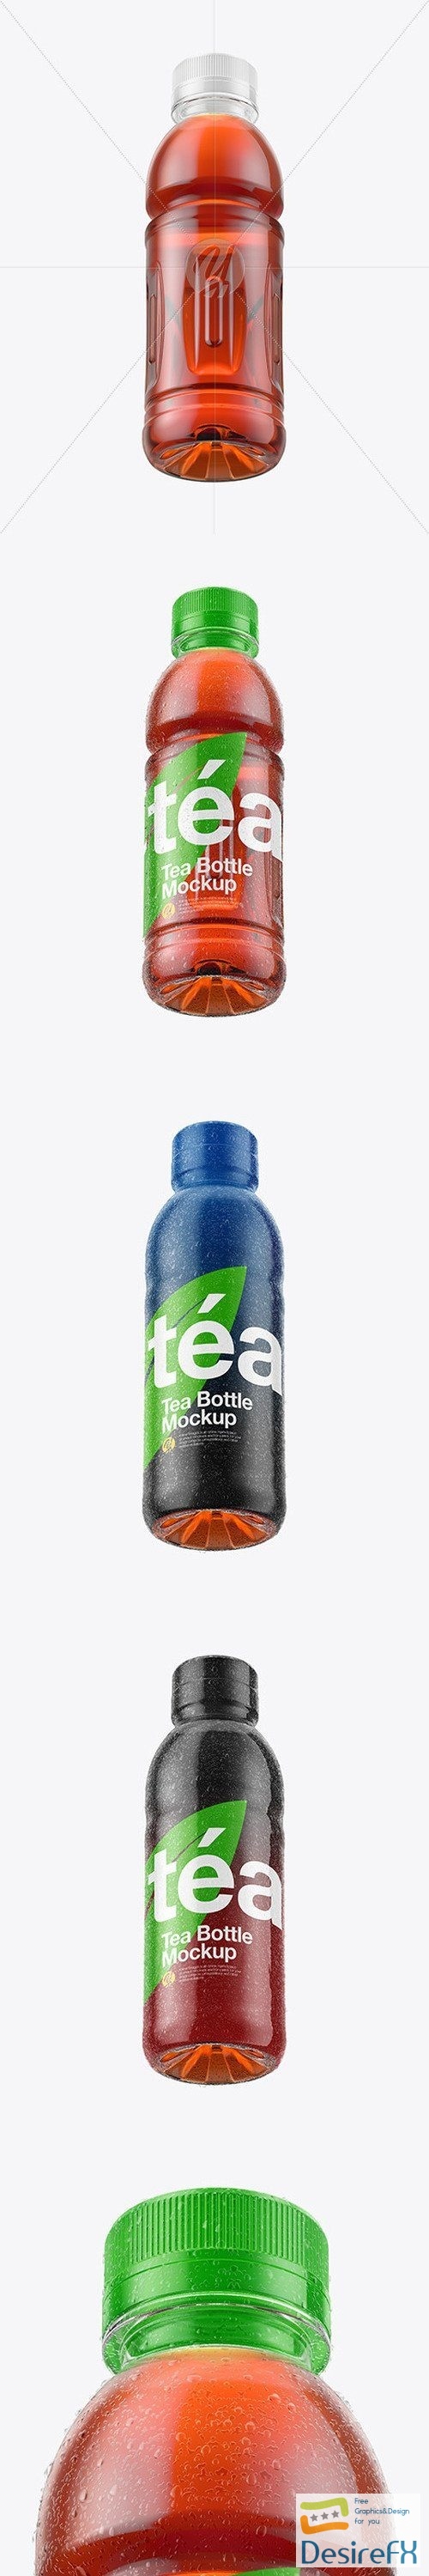 Tea Bottle with Condensation in Shrink Sleeve Mockup 48062